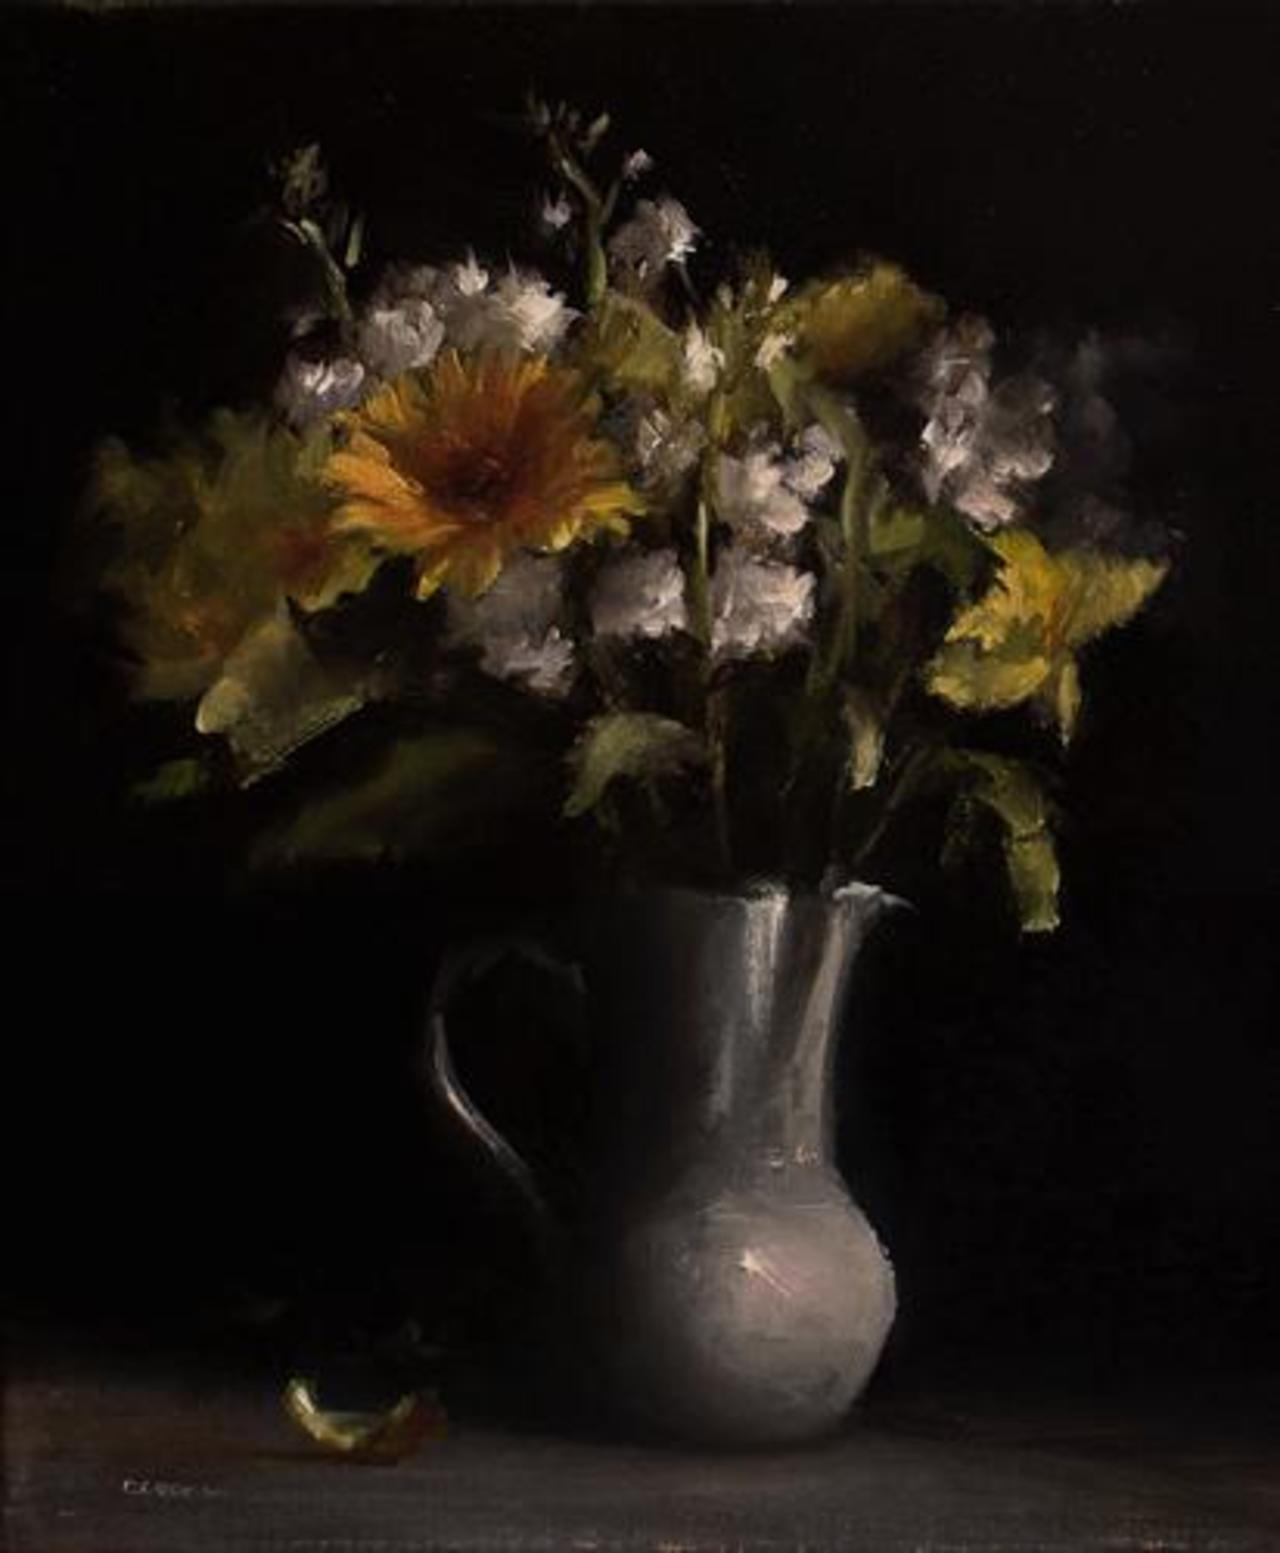 Flowers in Jug 12x10" #painting #art #stilllife http://t.co/eRafqpSFXE